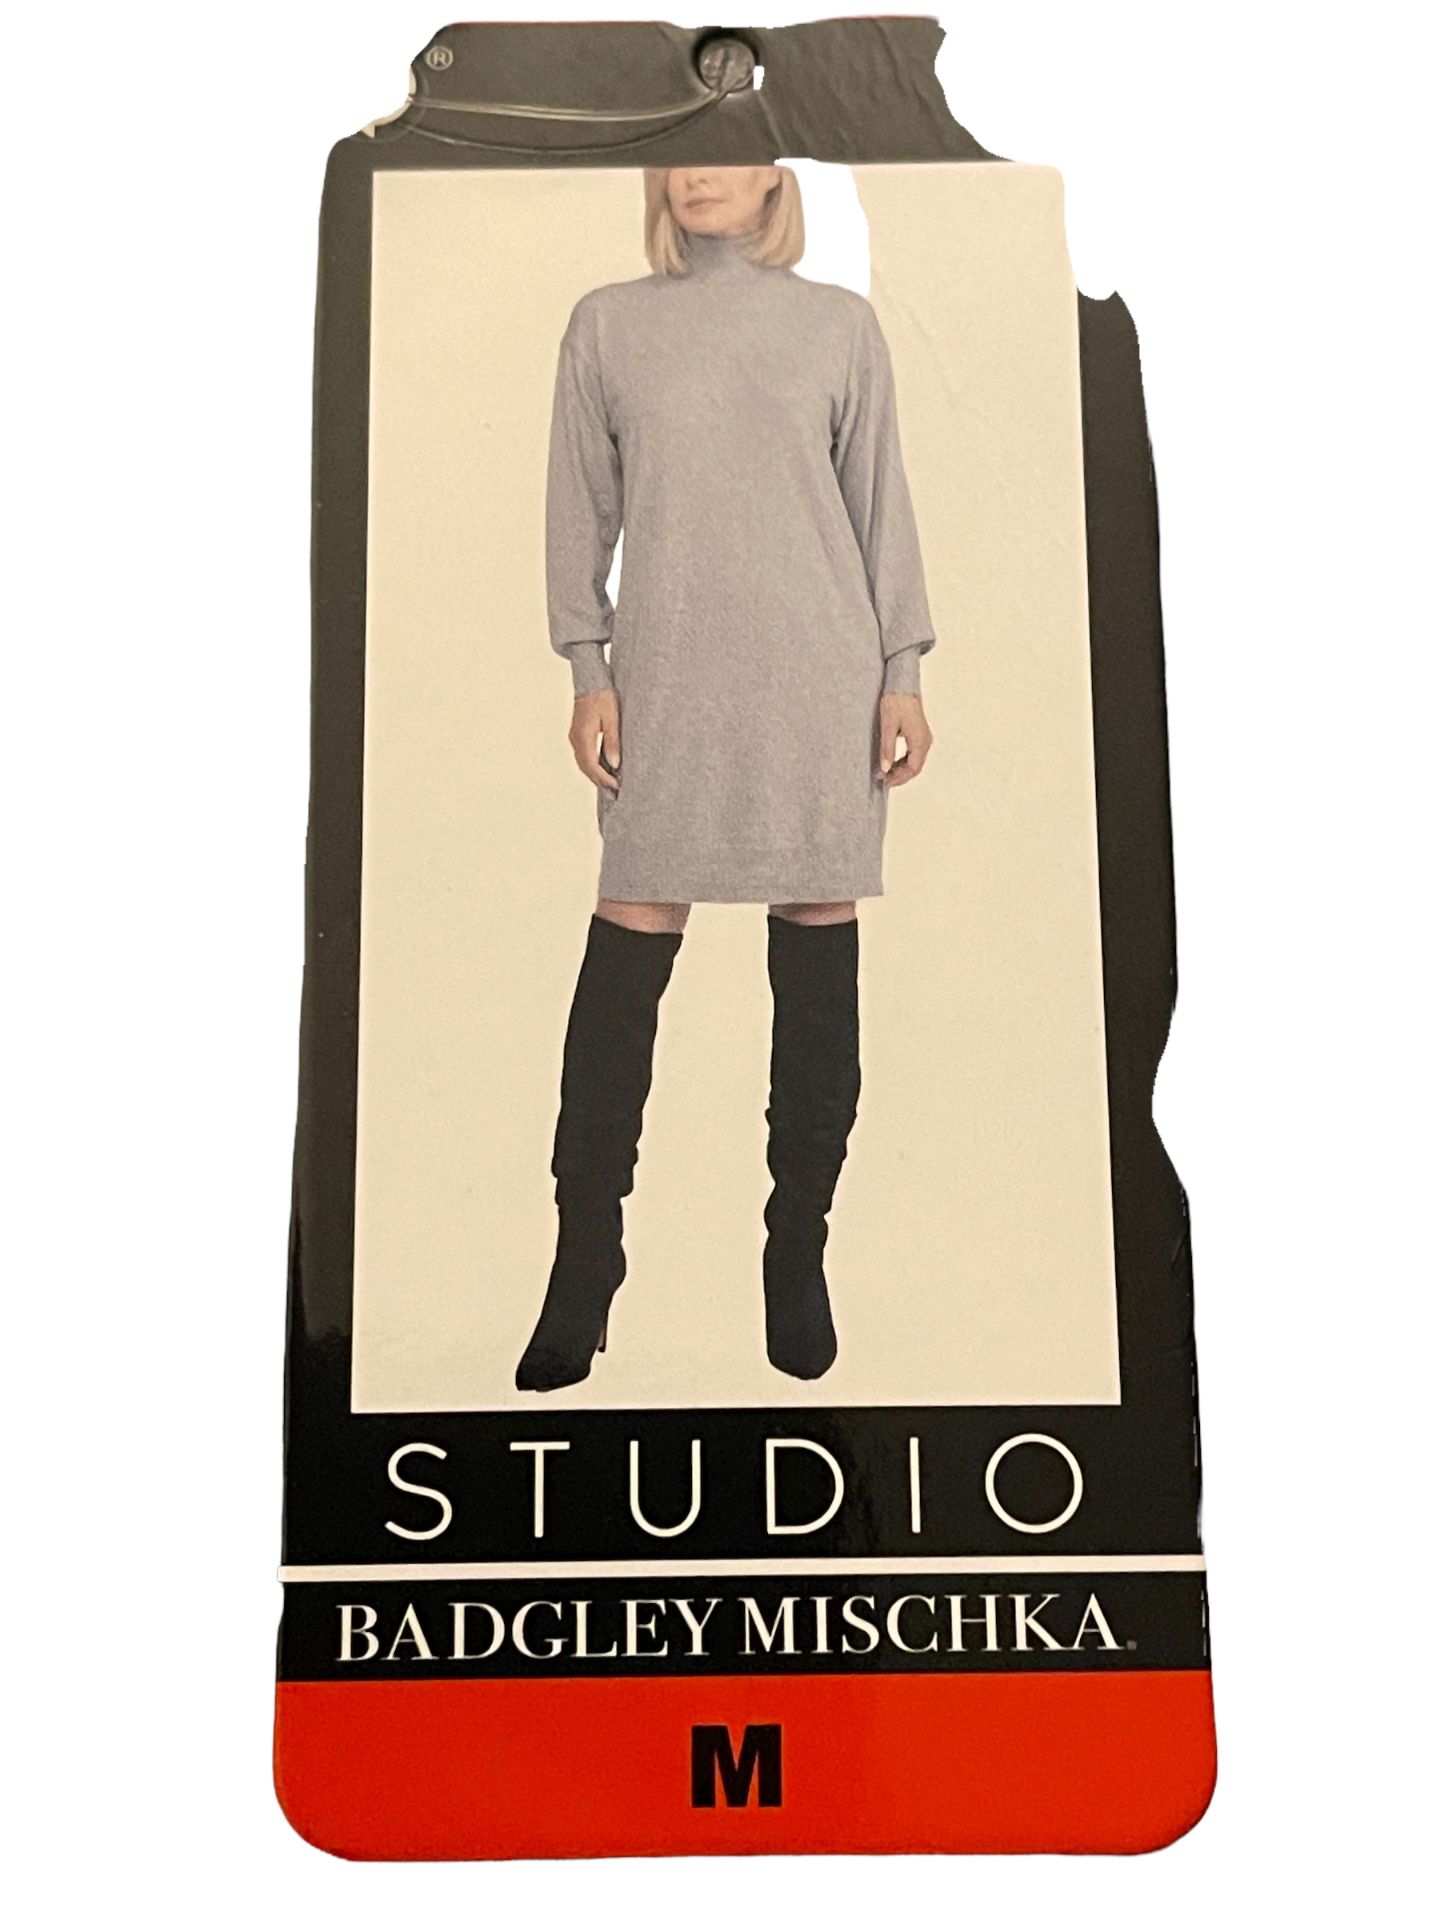 Designer Badgley Mischka Lightweight Fine Knitted Stretchy Jumper Dress UK 12 M RRP £17.99 - Image 4 of 5